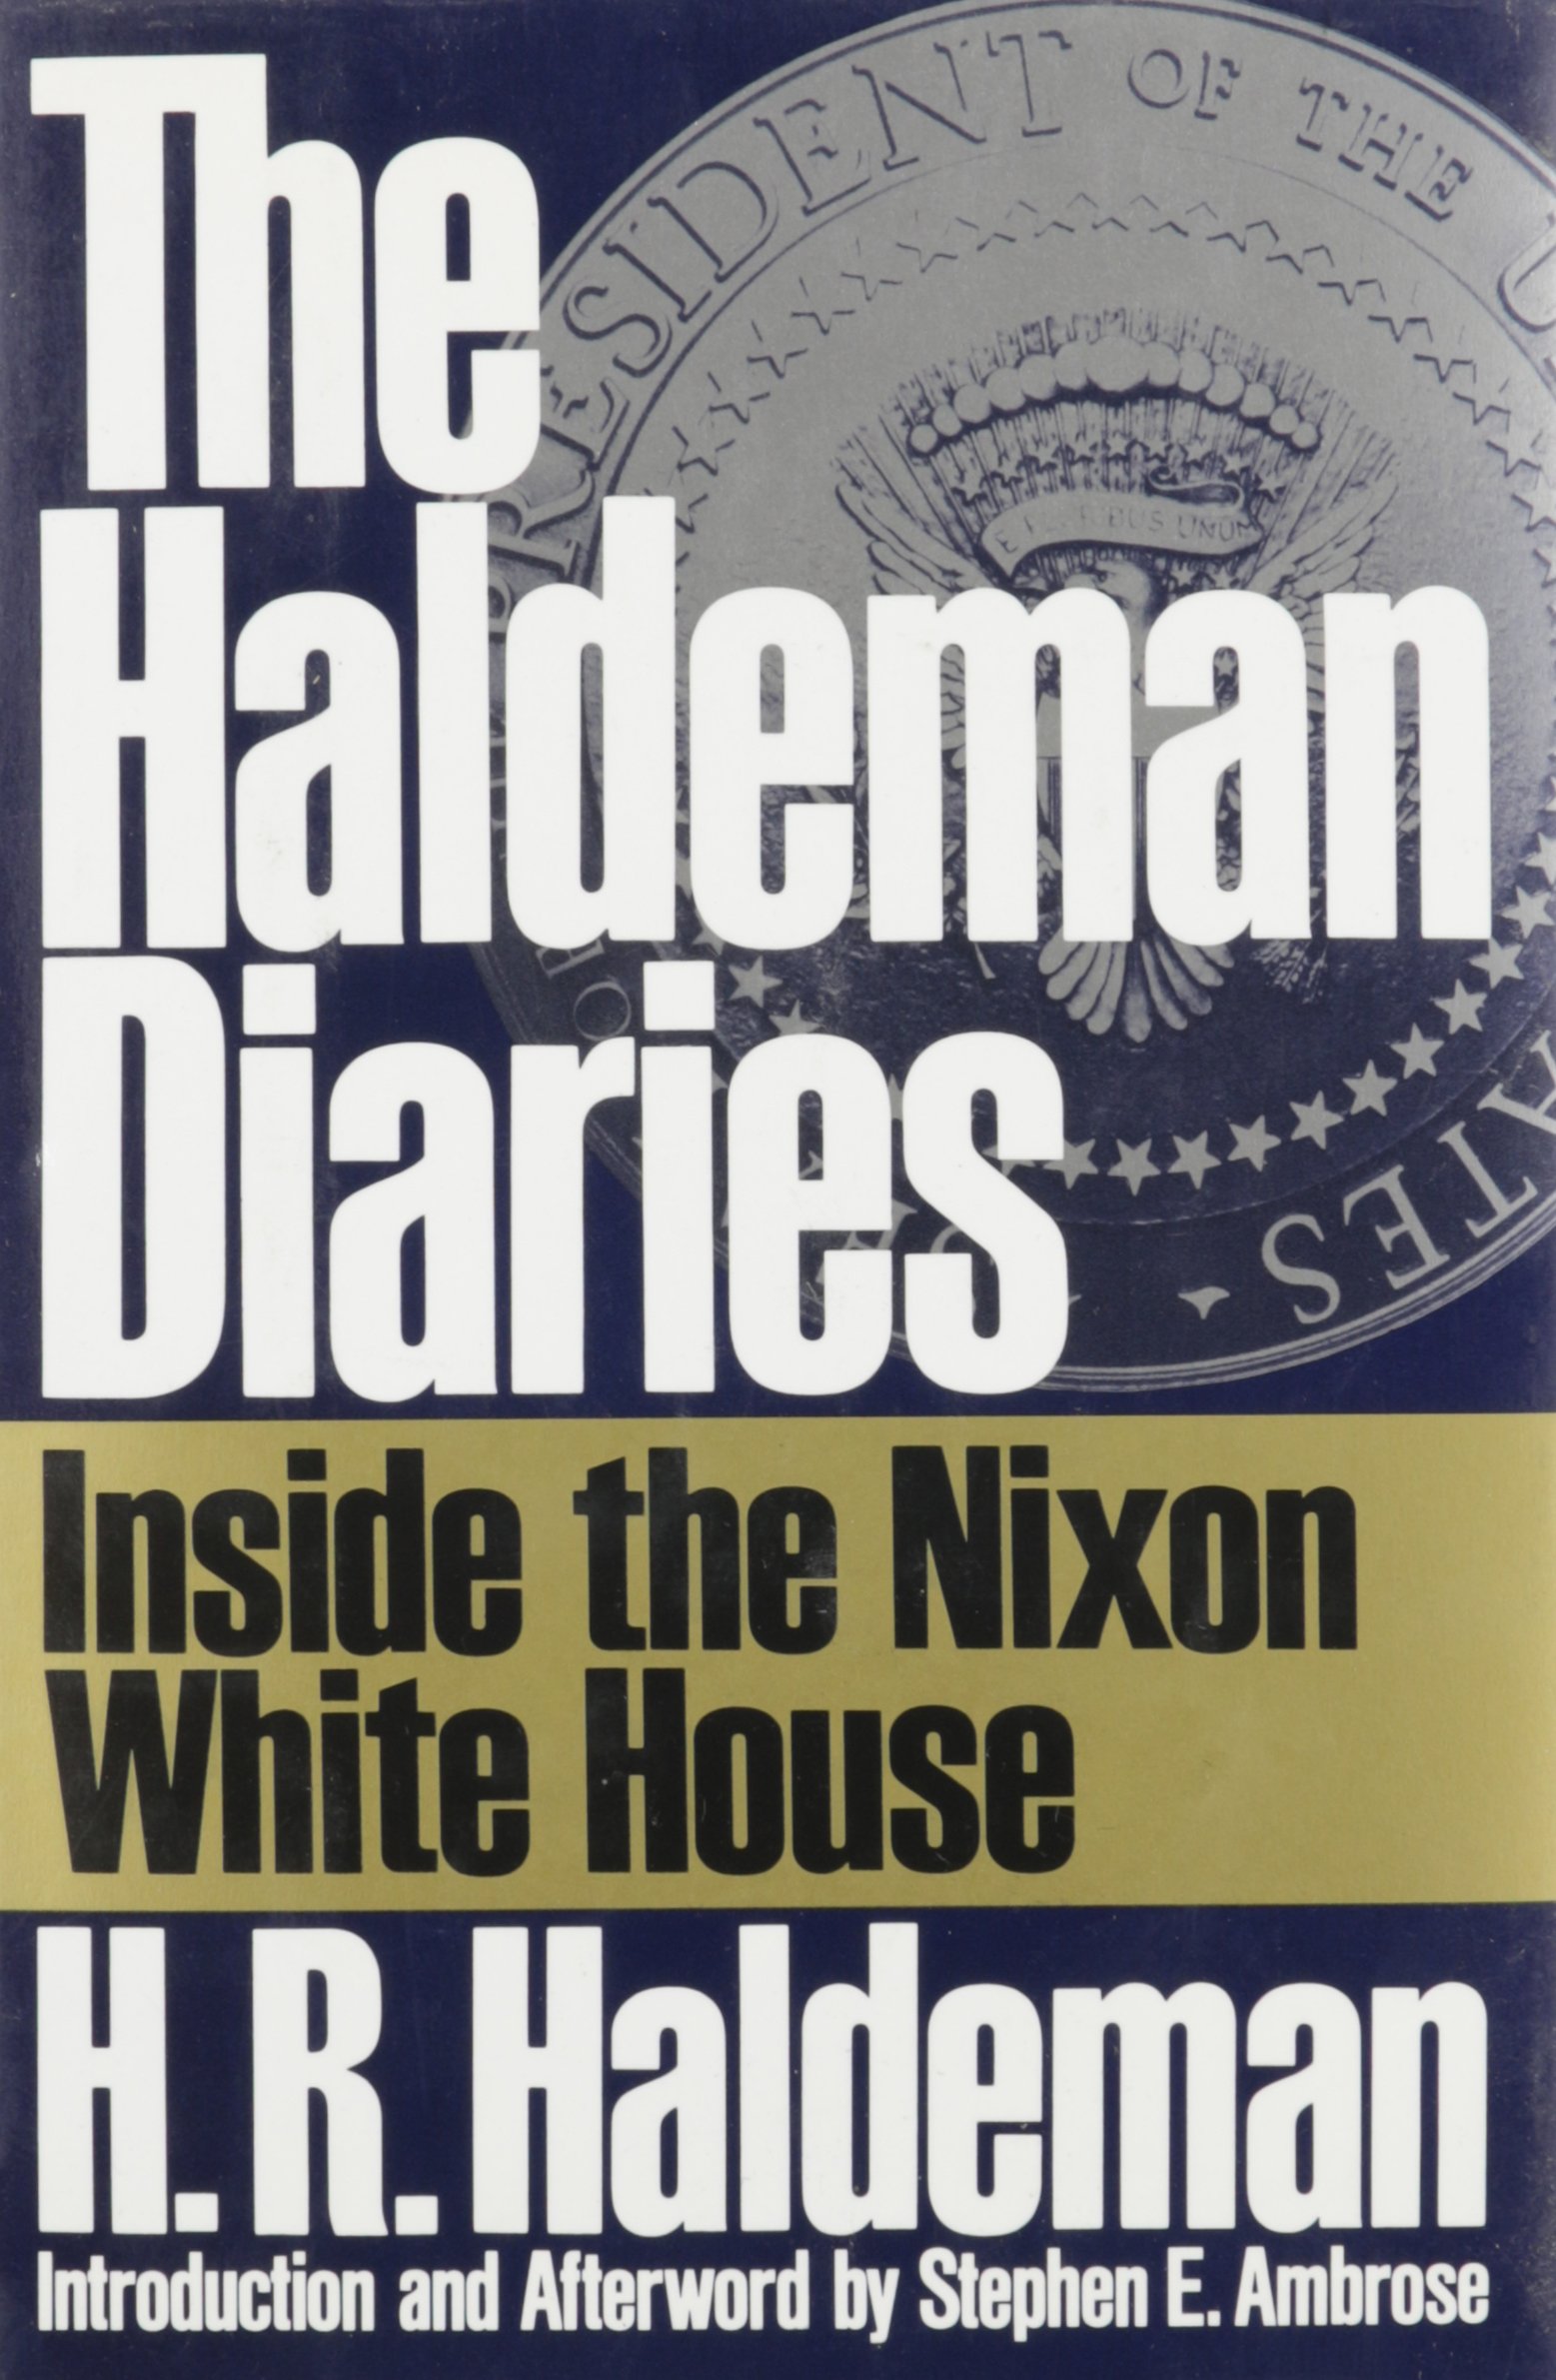 The Haldeman diaries